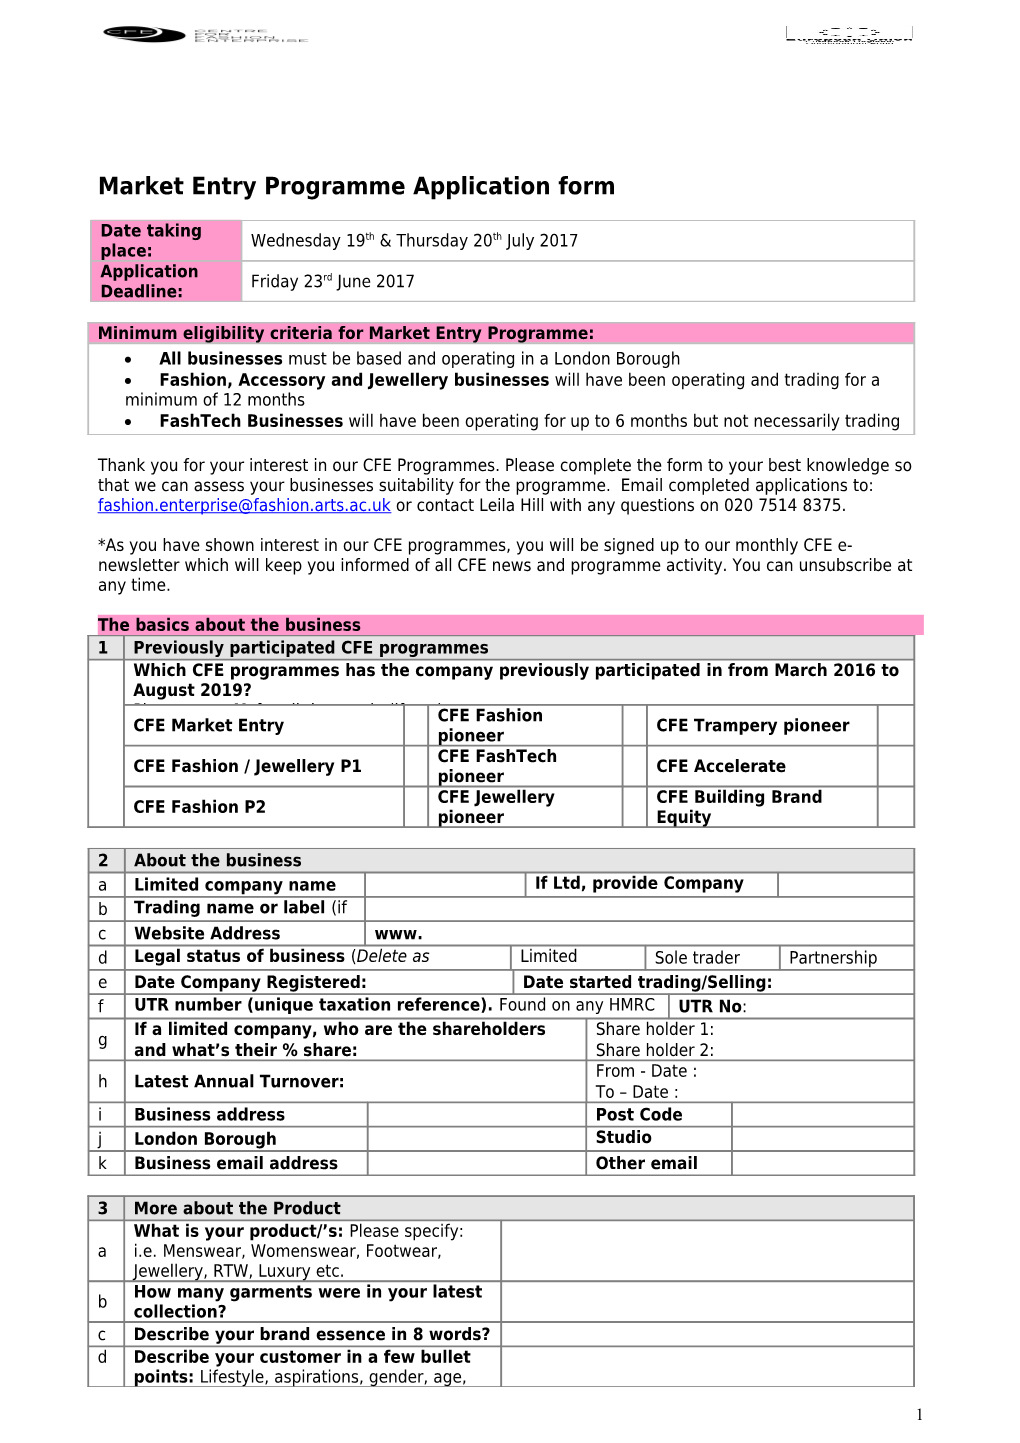 Market Entry Programme Application Form